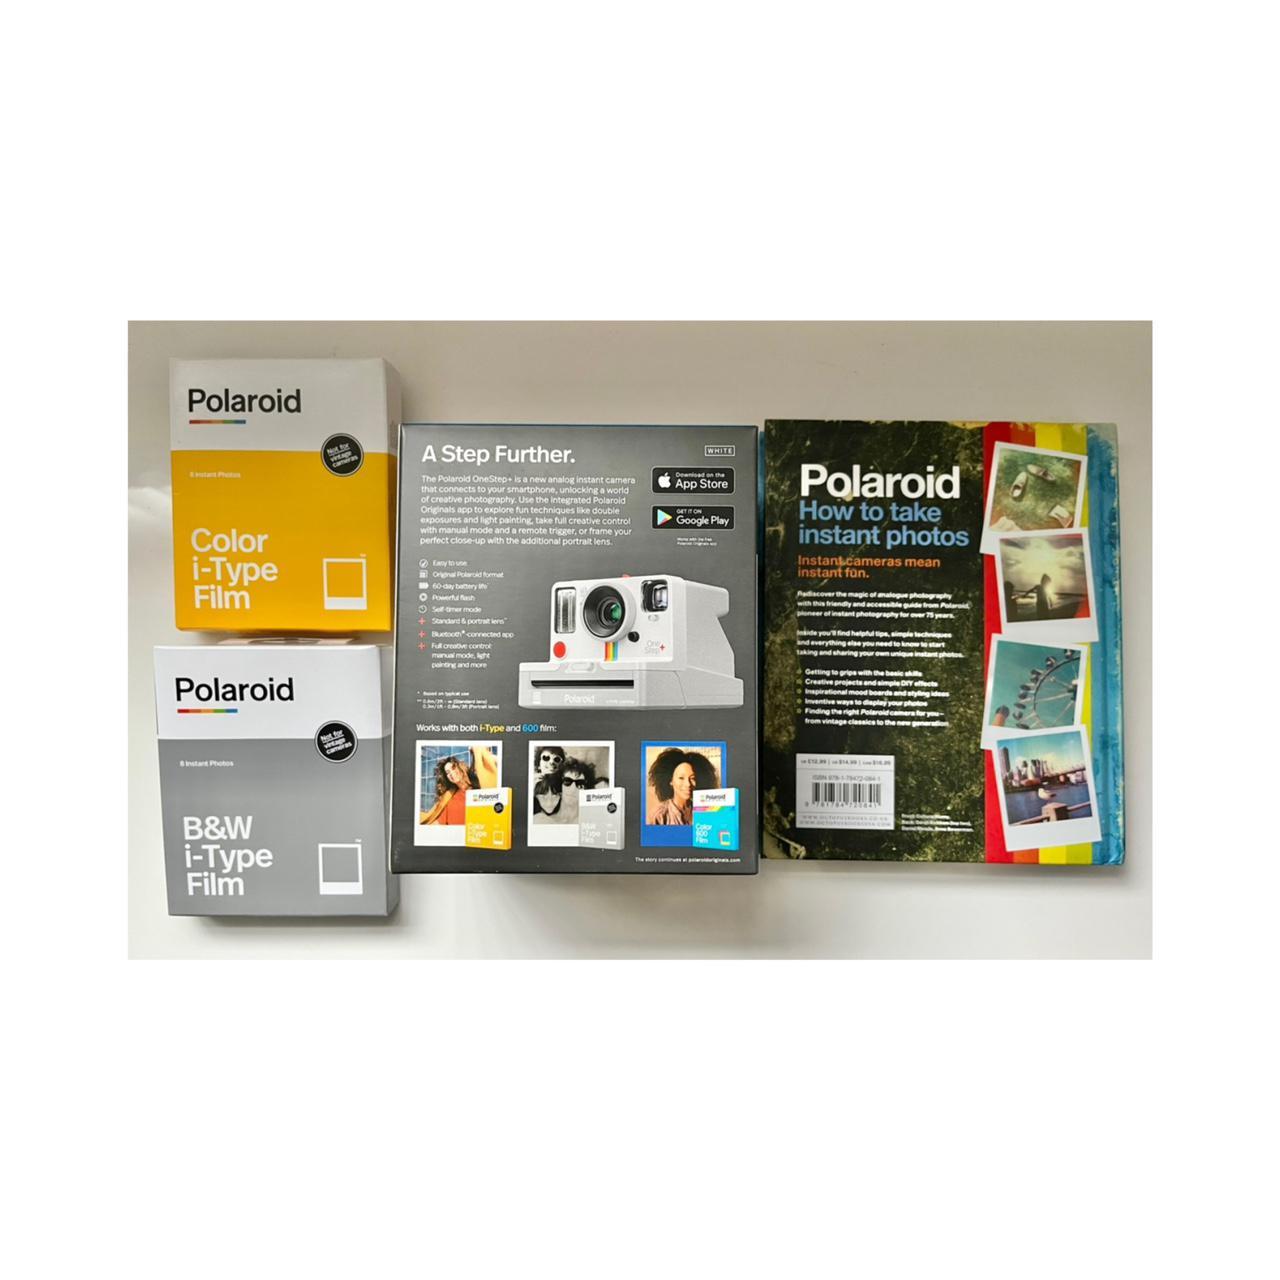 Product Image 2 - Polaroid Originals OneStep+ camera bundle.

Statement